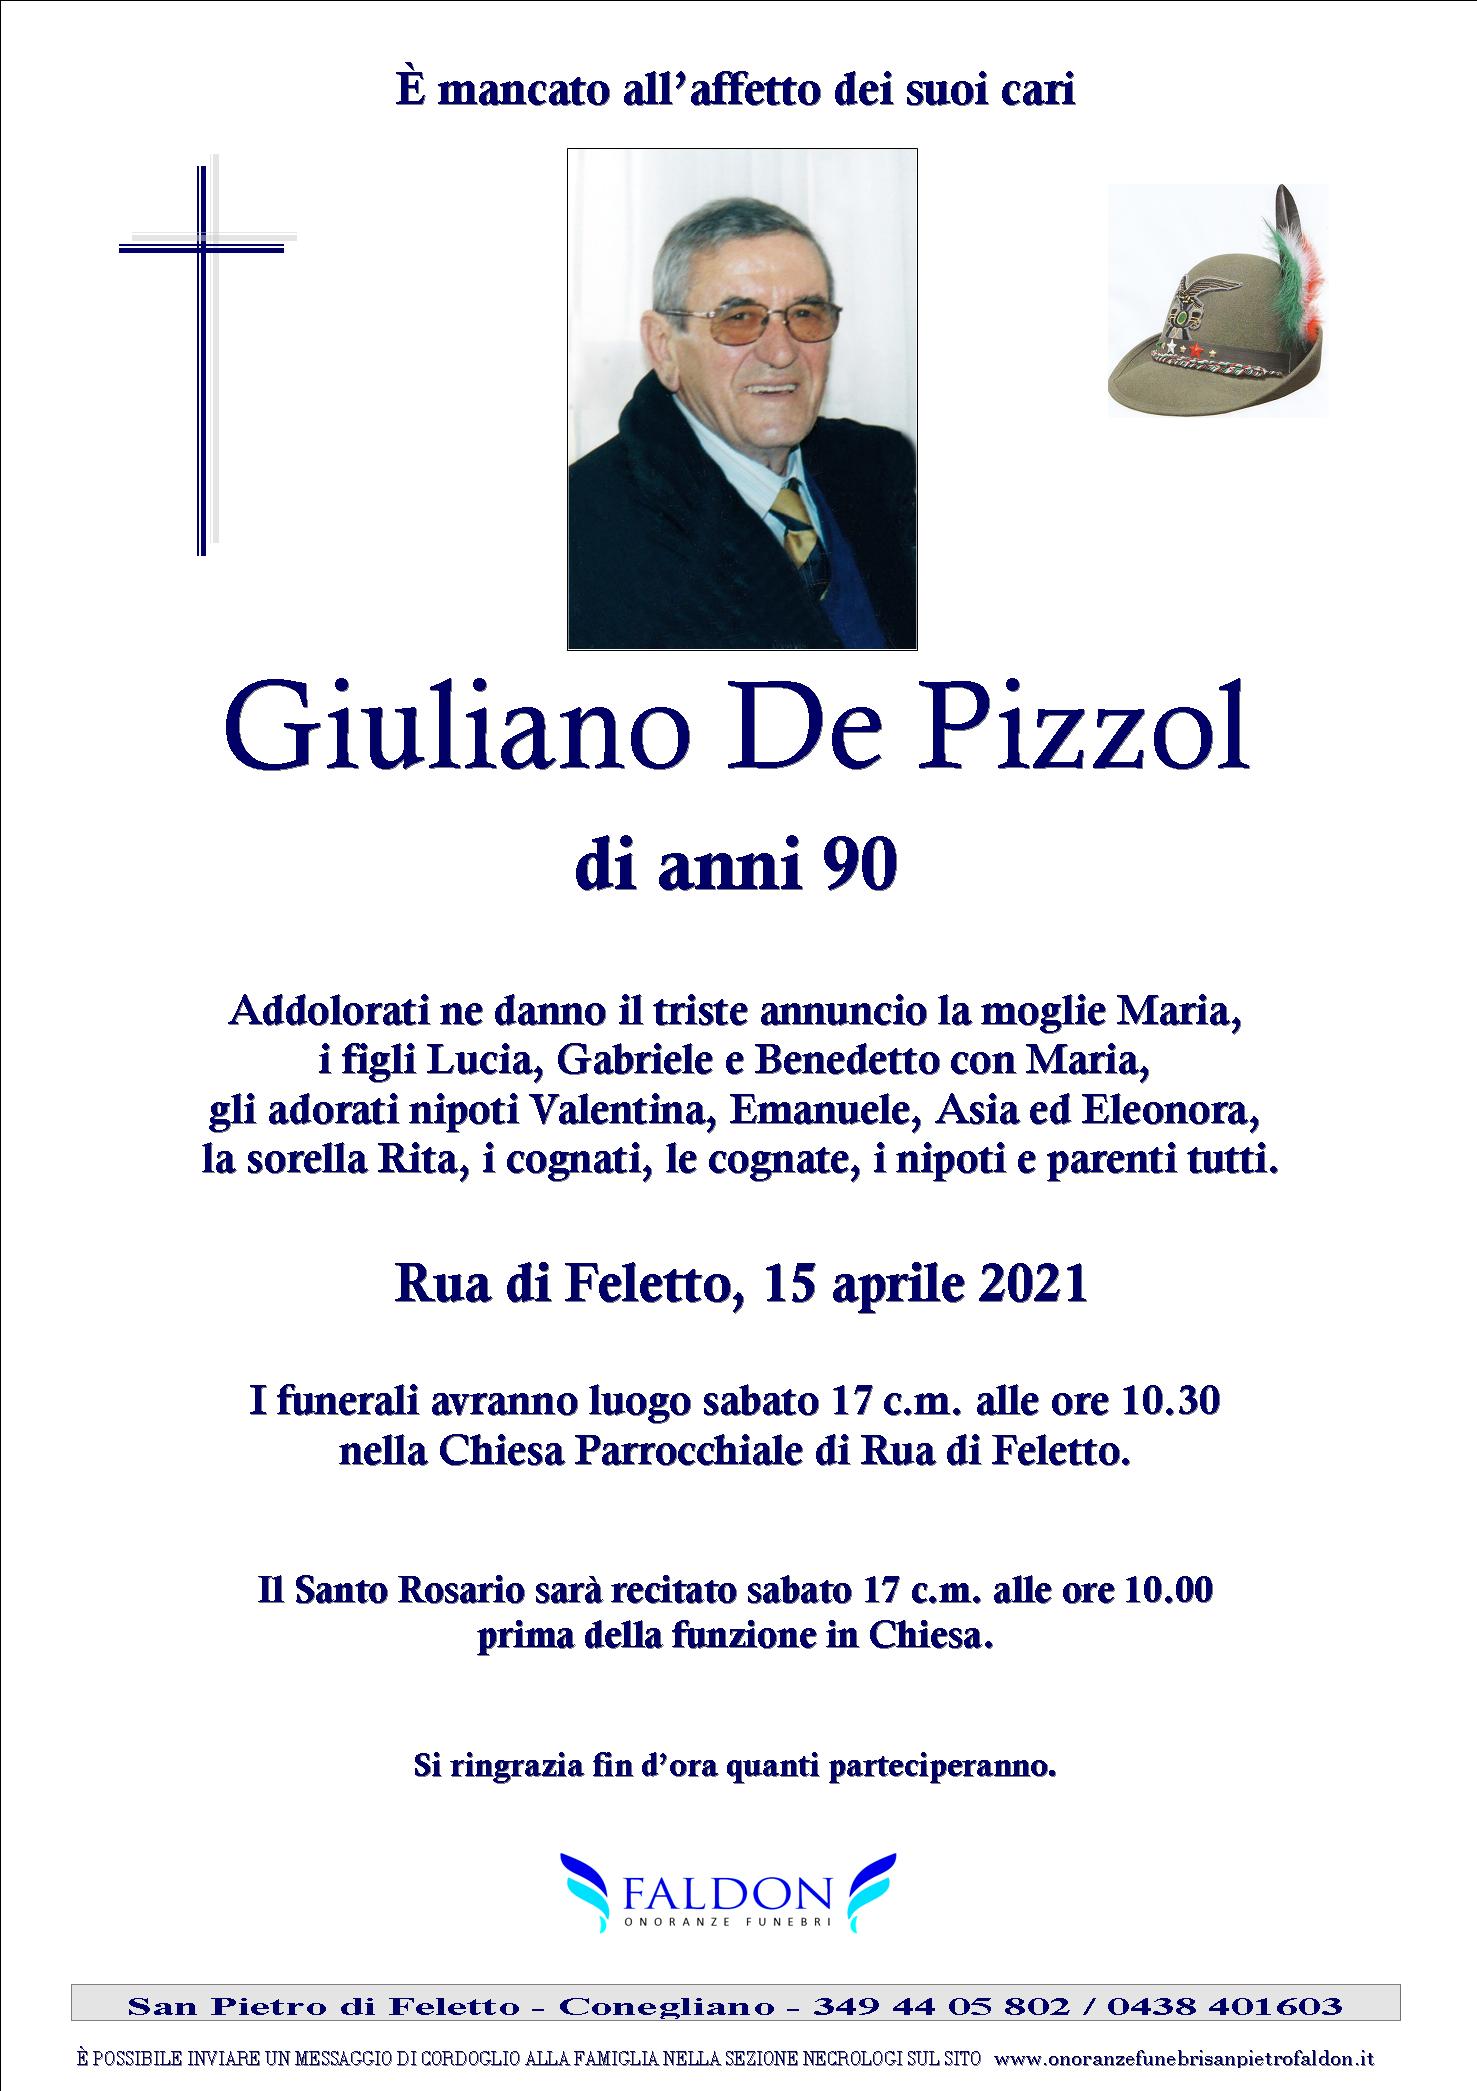 Giuliano De Pizzol